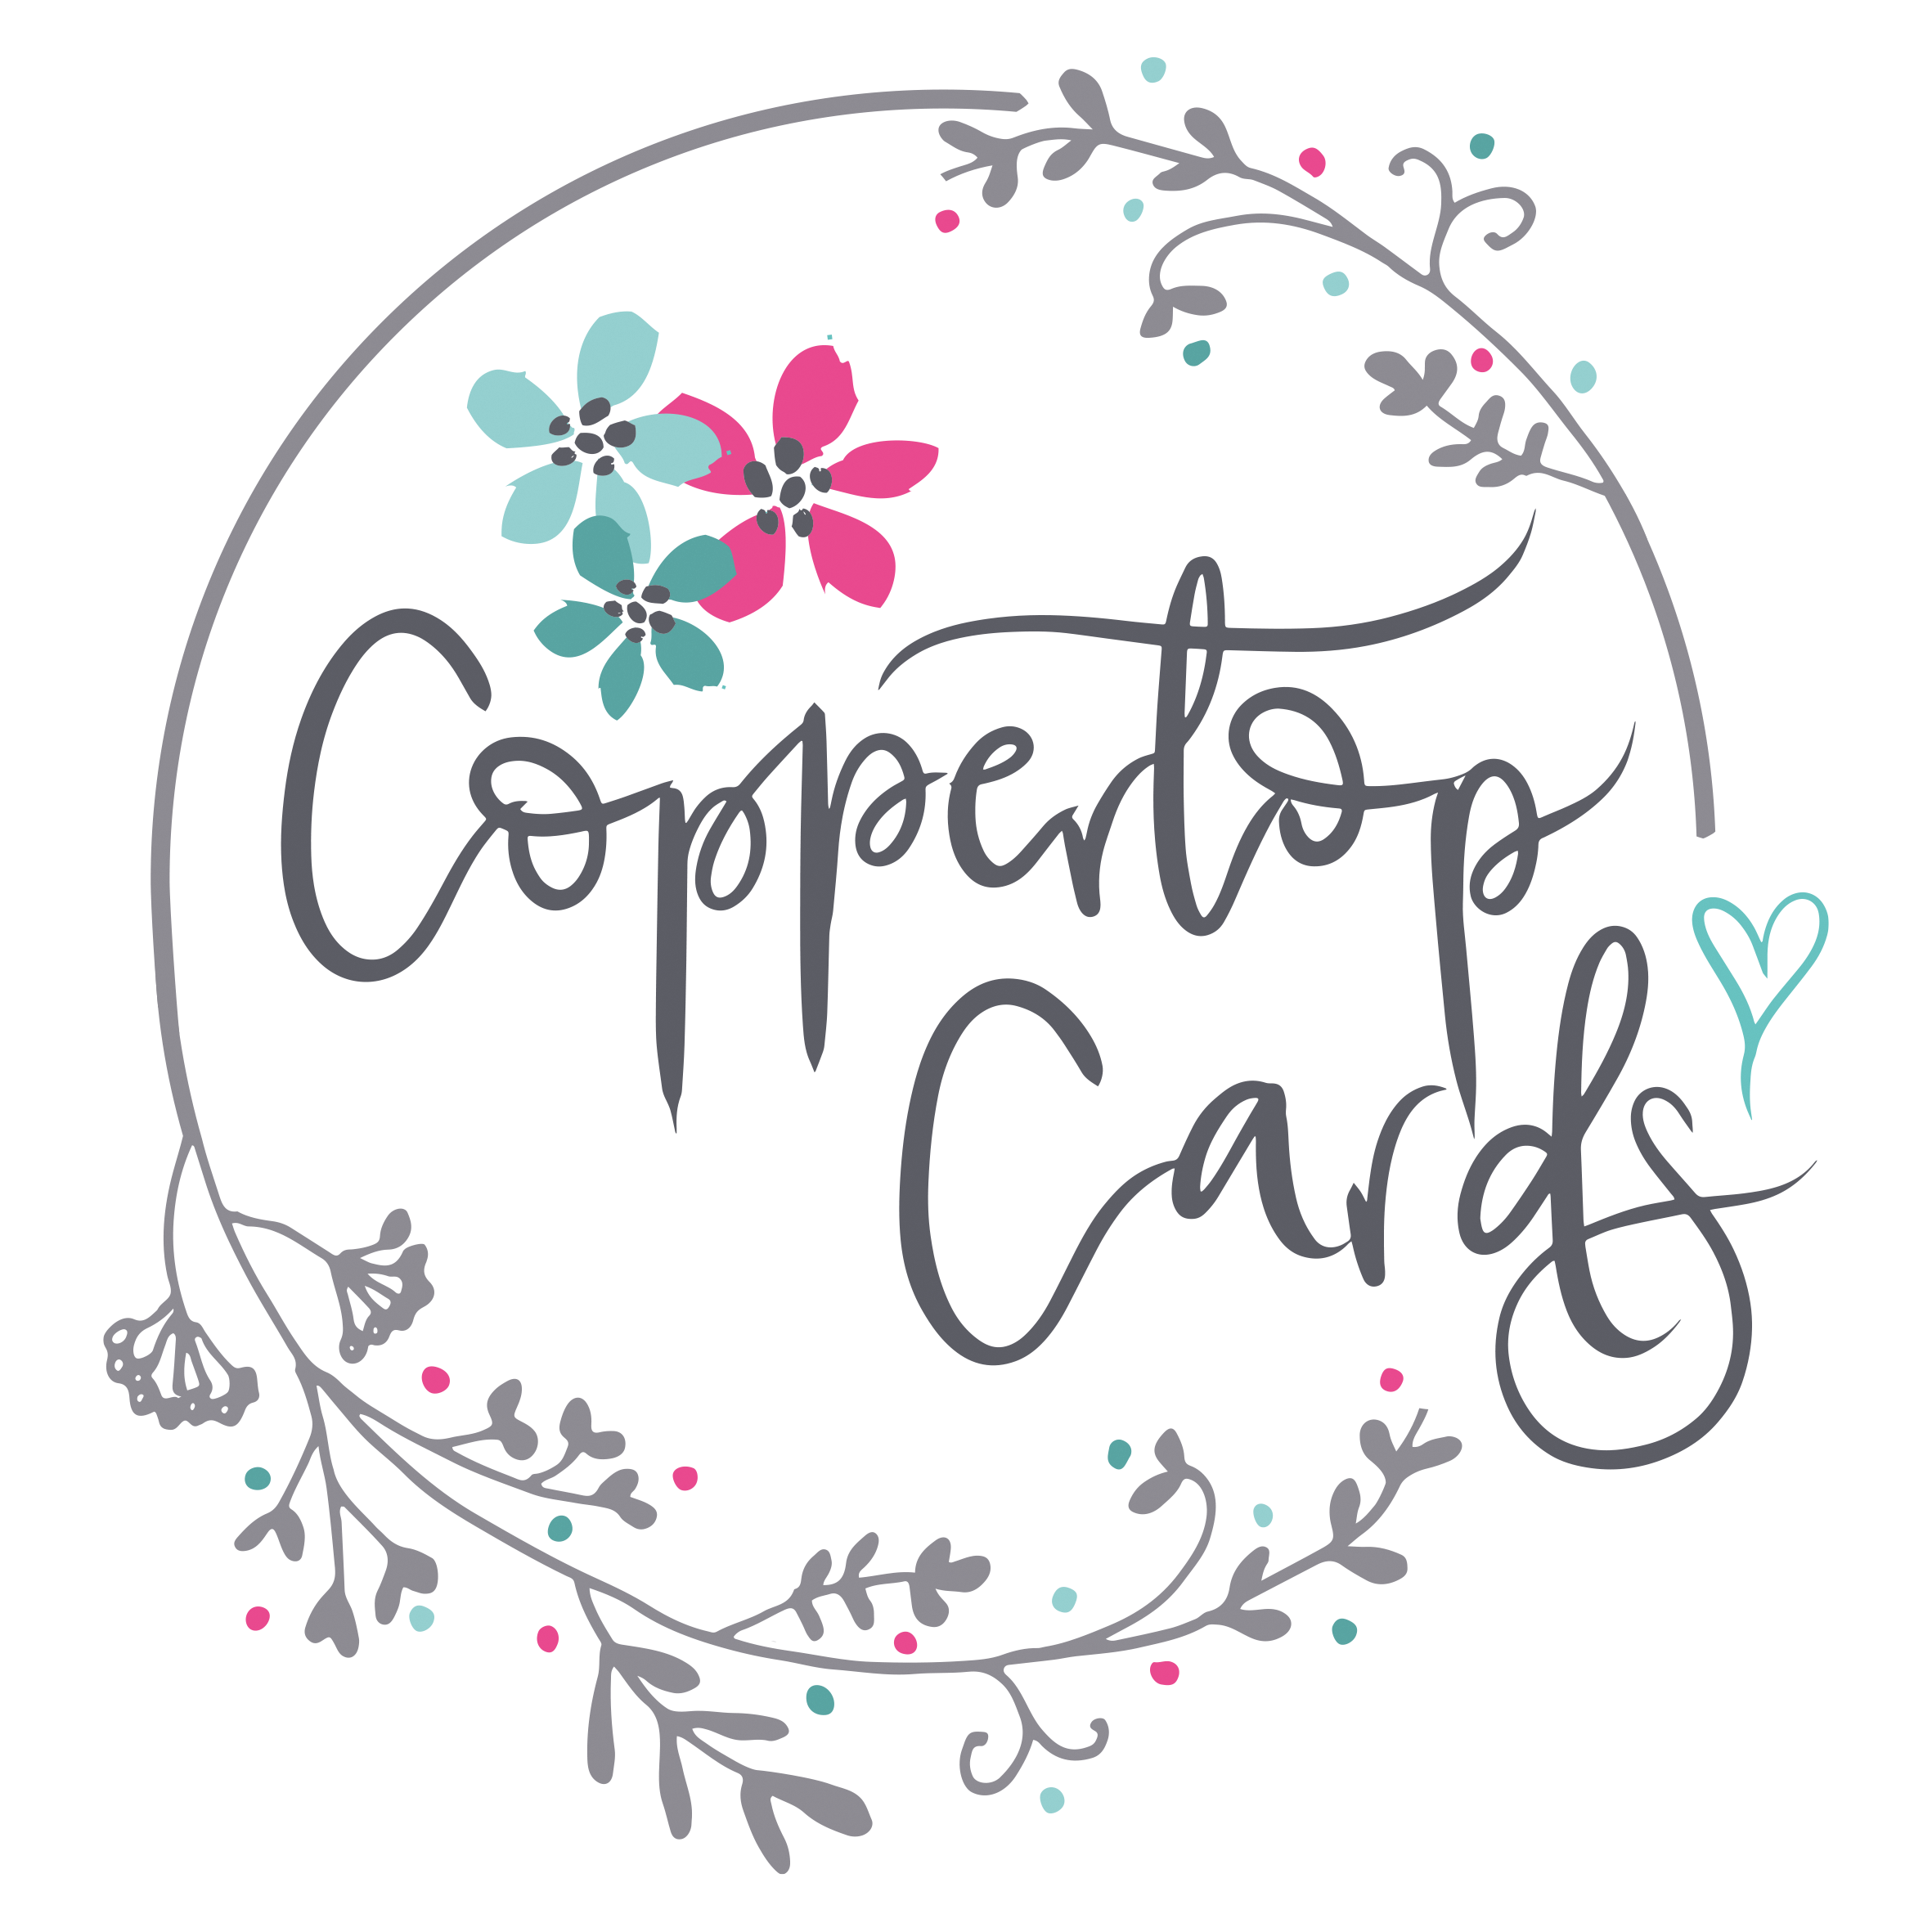 Coppertop Cards